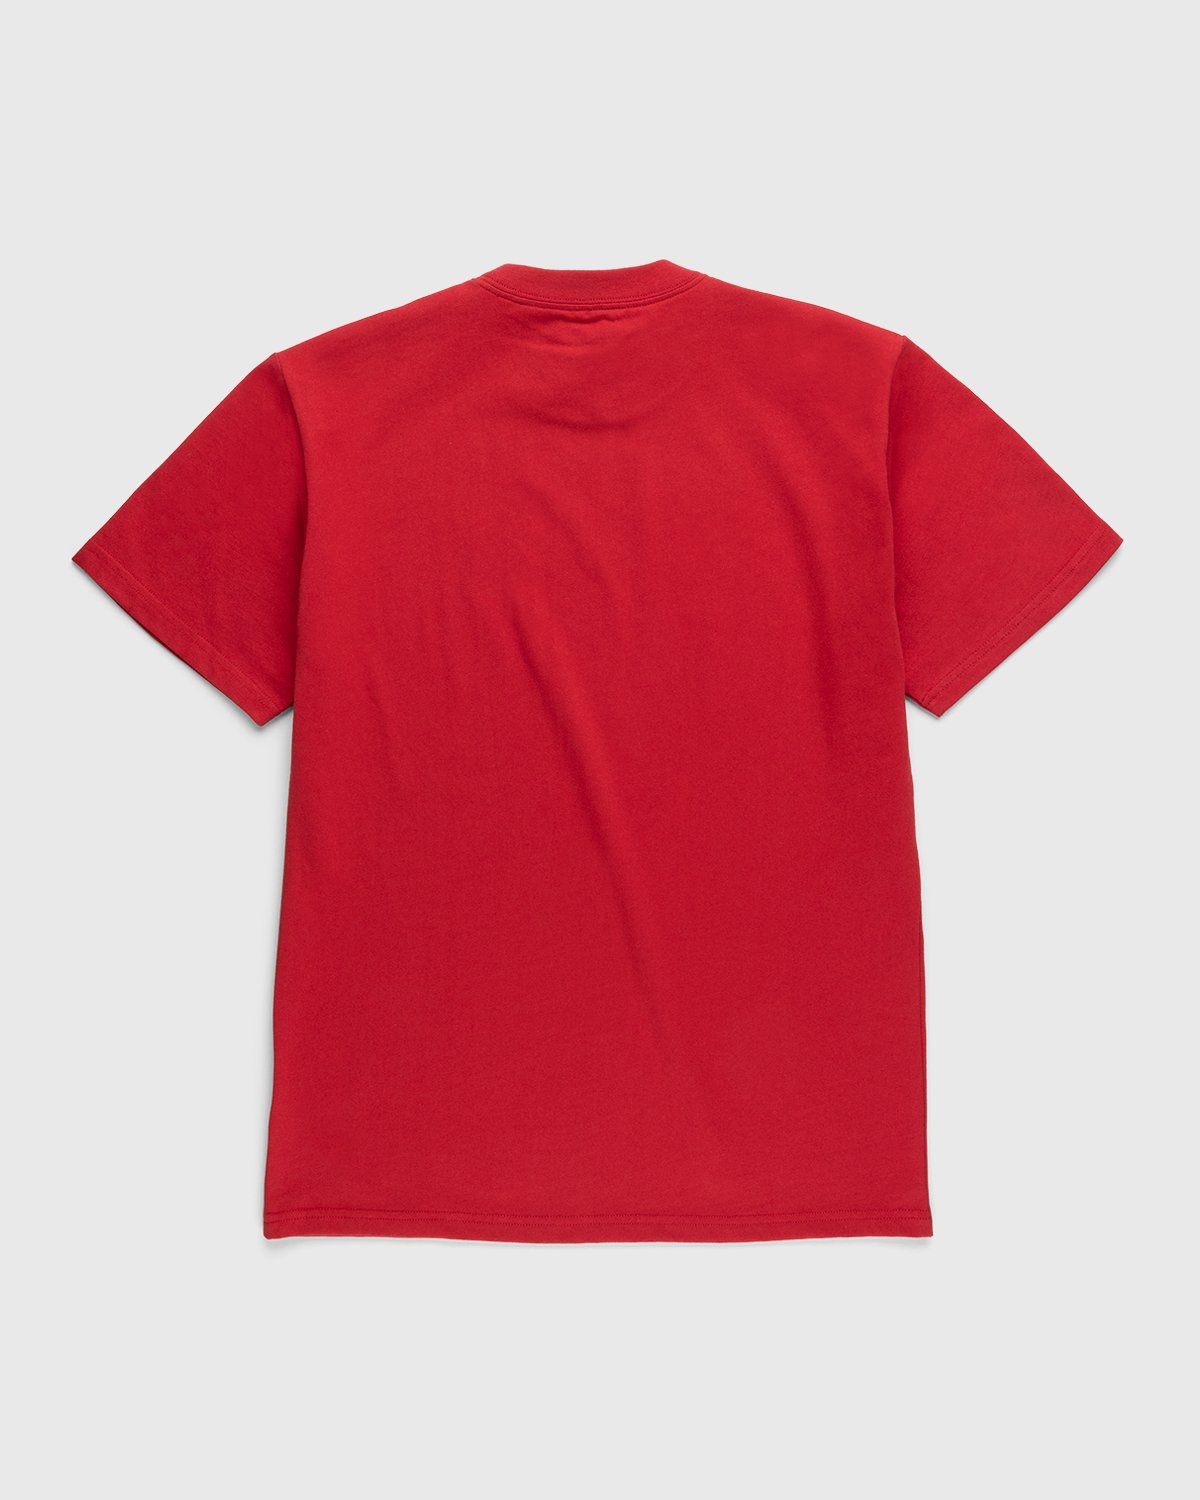 Carhartt WIP - University Script T-Shirt Cornel White - Clothing - Red - Image 2